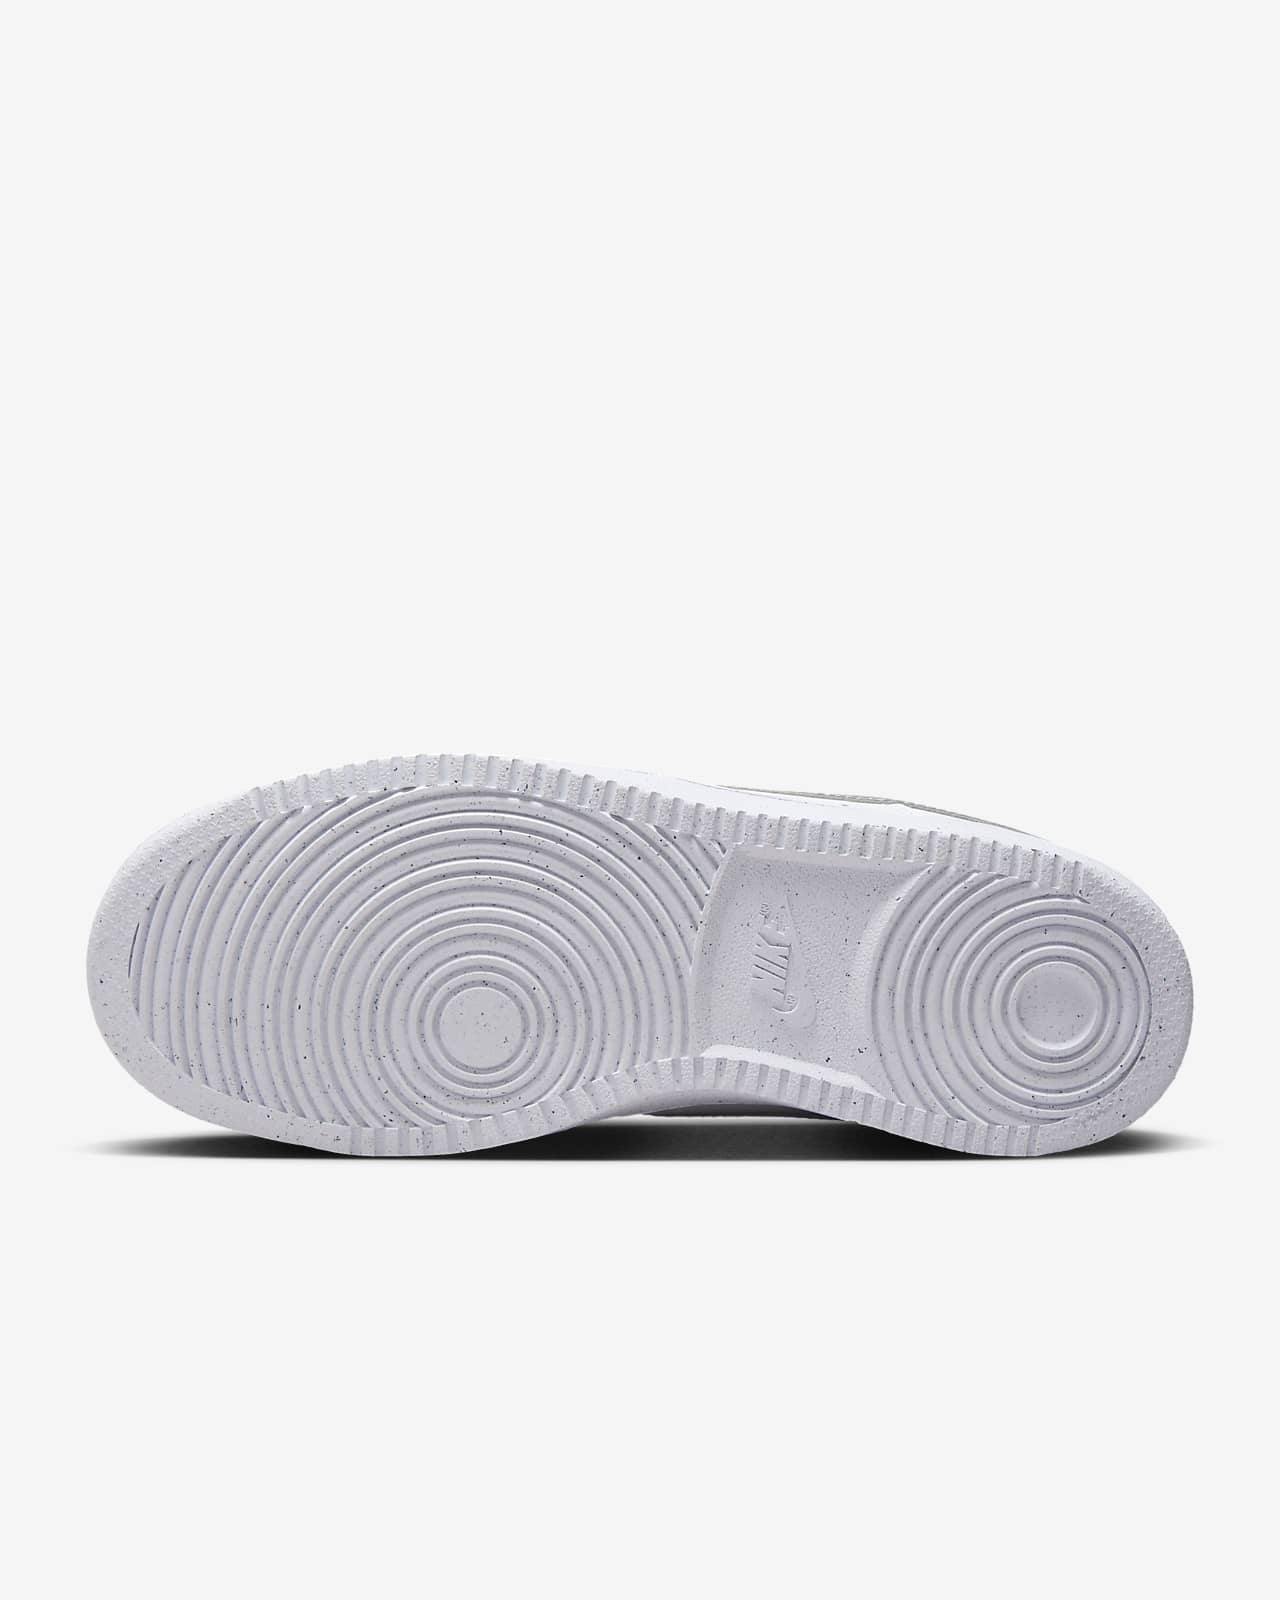 Sneakers Release: Nike Air Force 1 ’07 Essential “